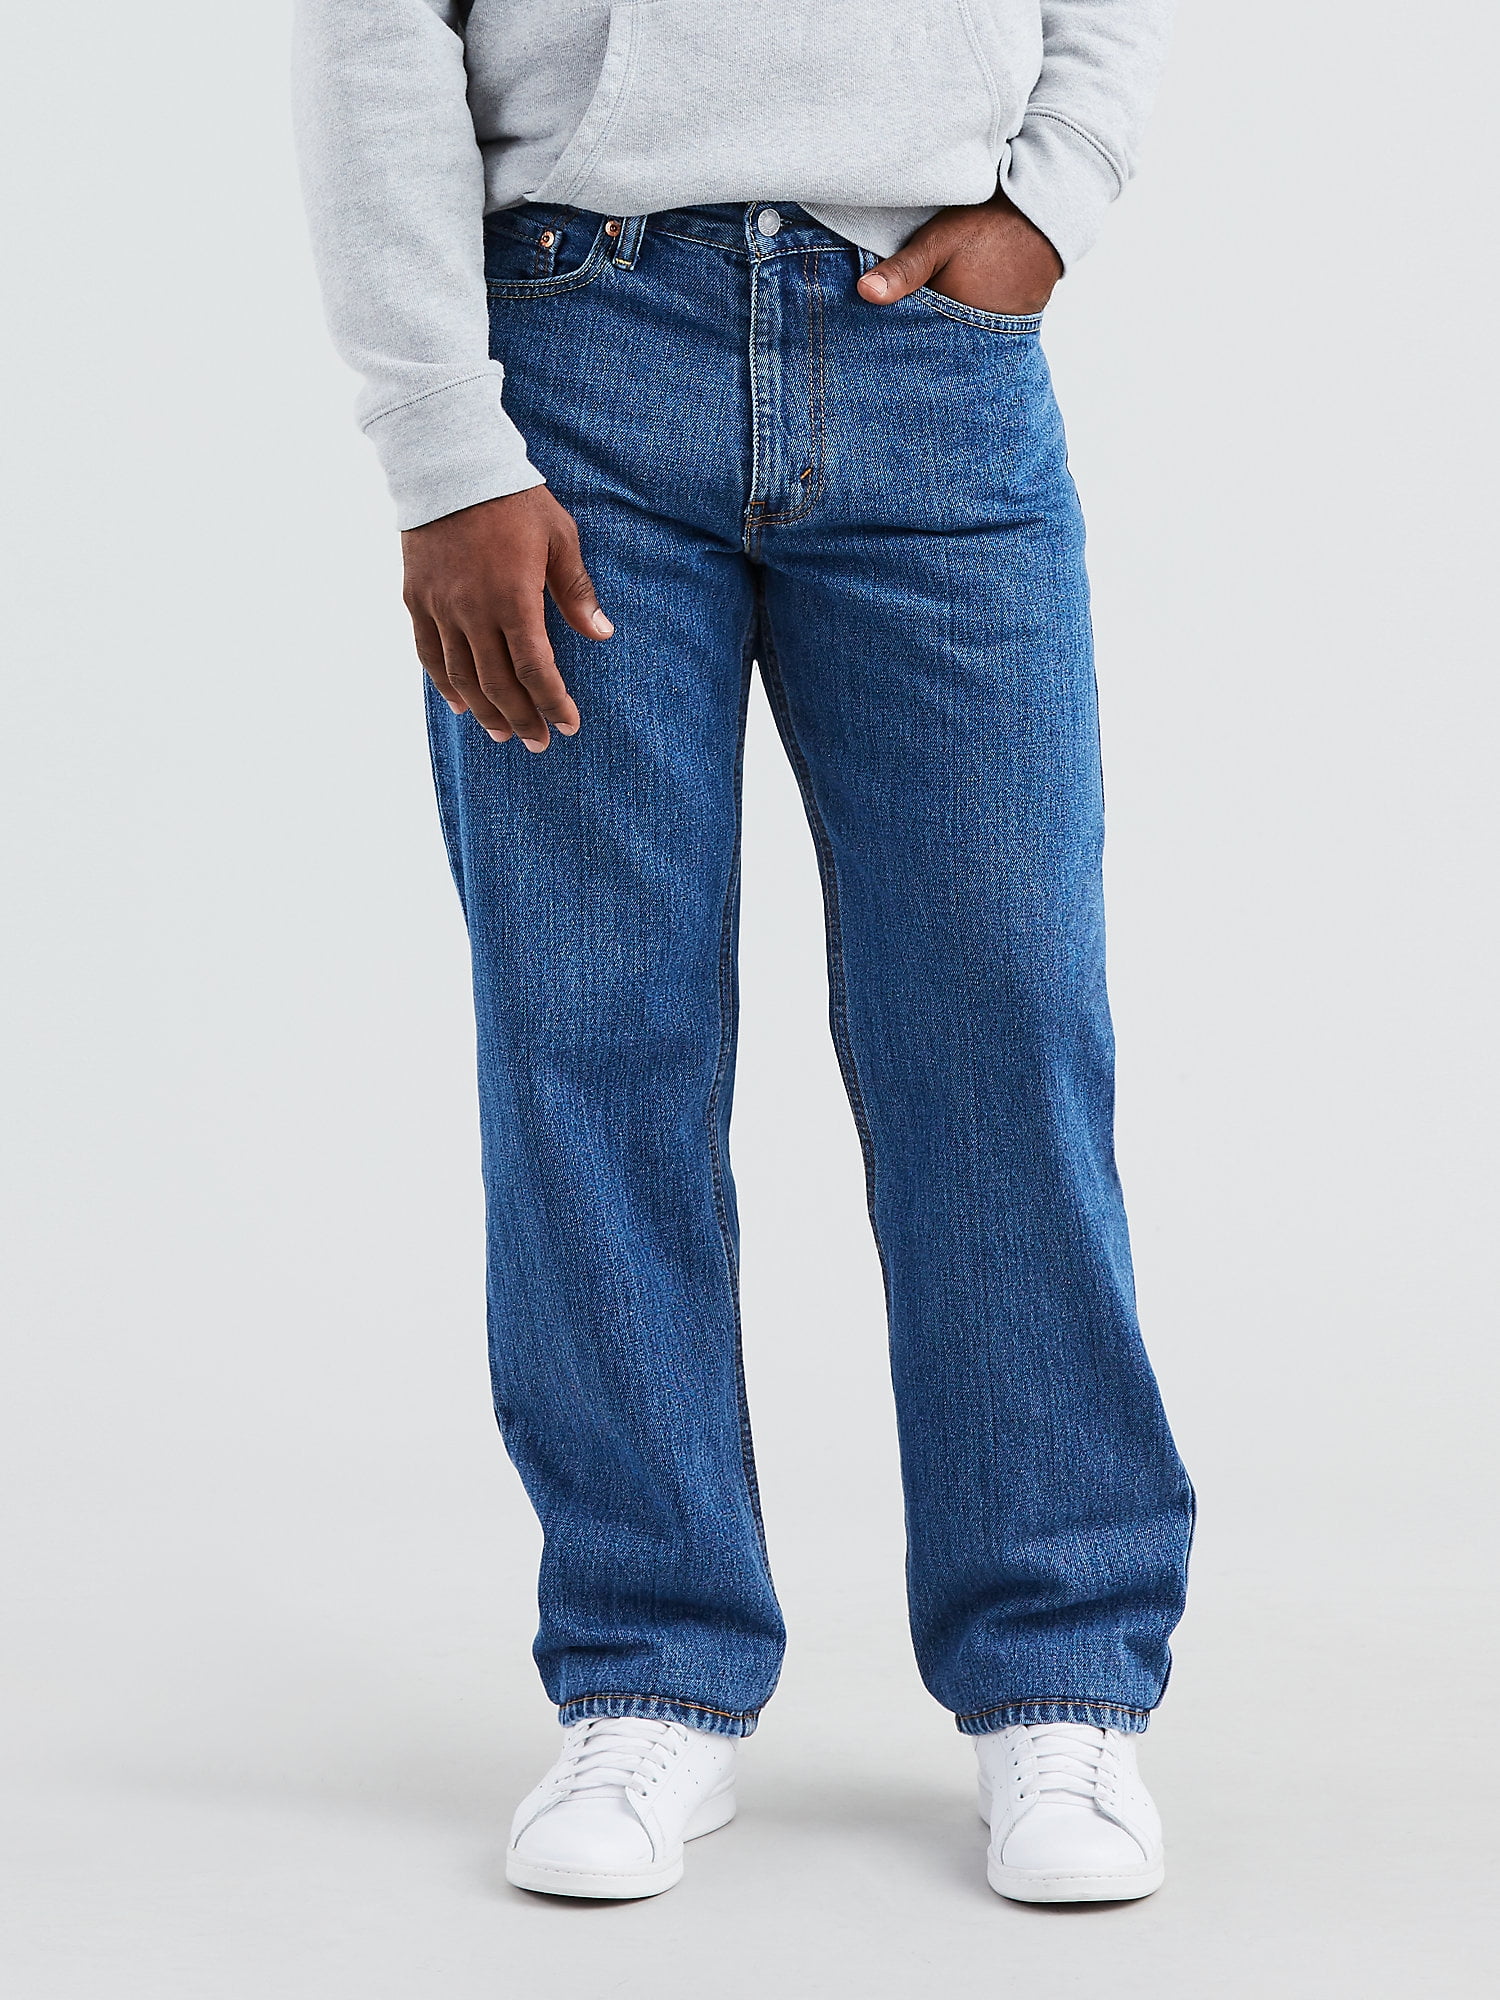 Levi's Men's Relaxed Fit Jeans Walmart.com